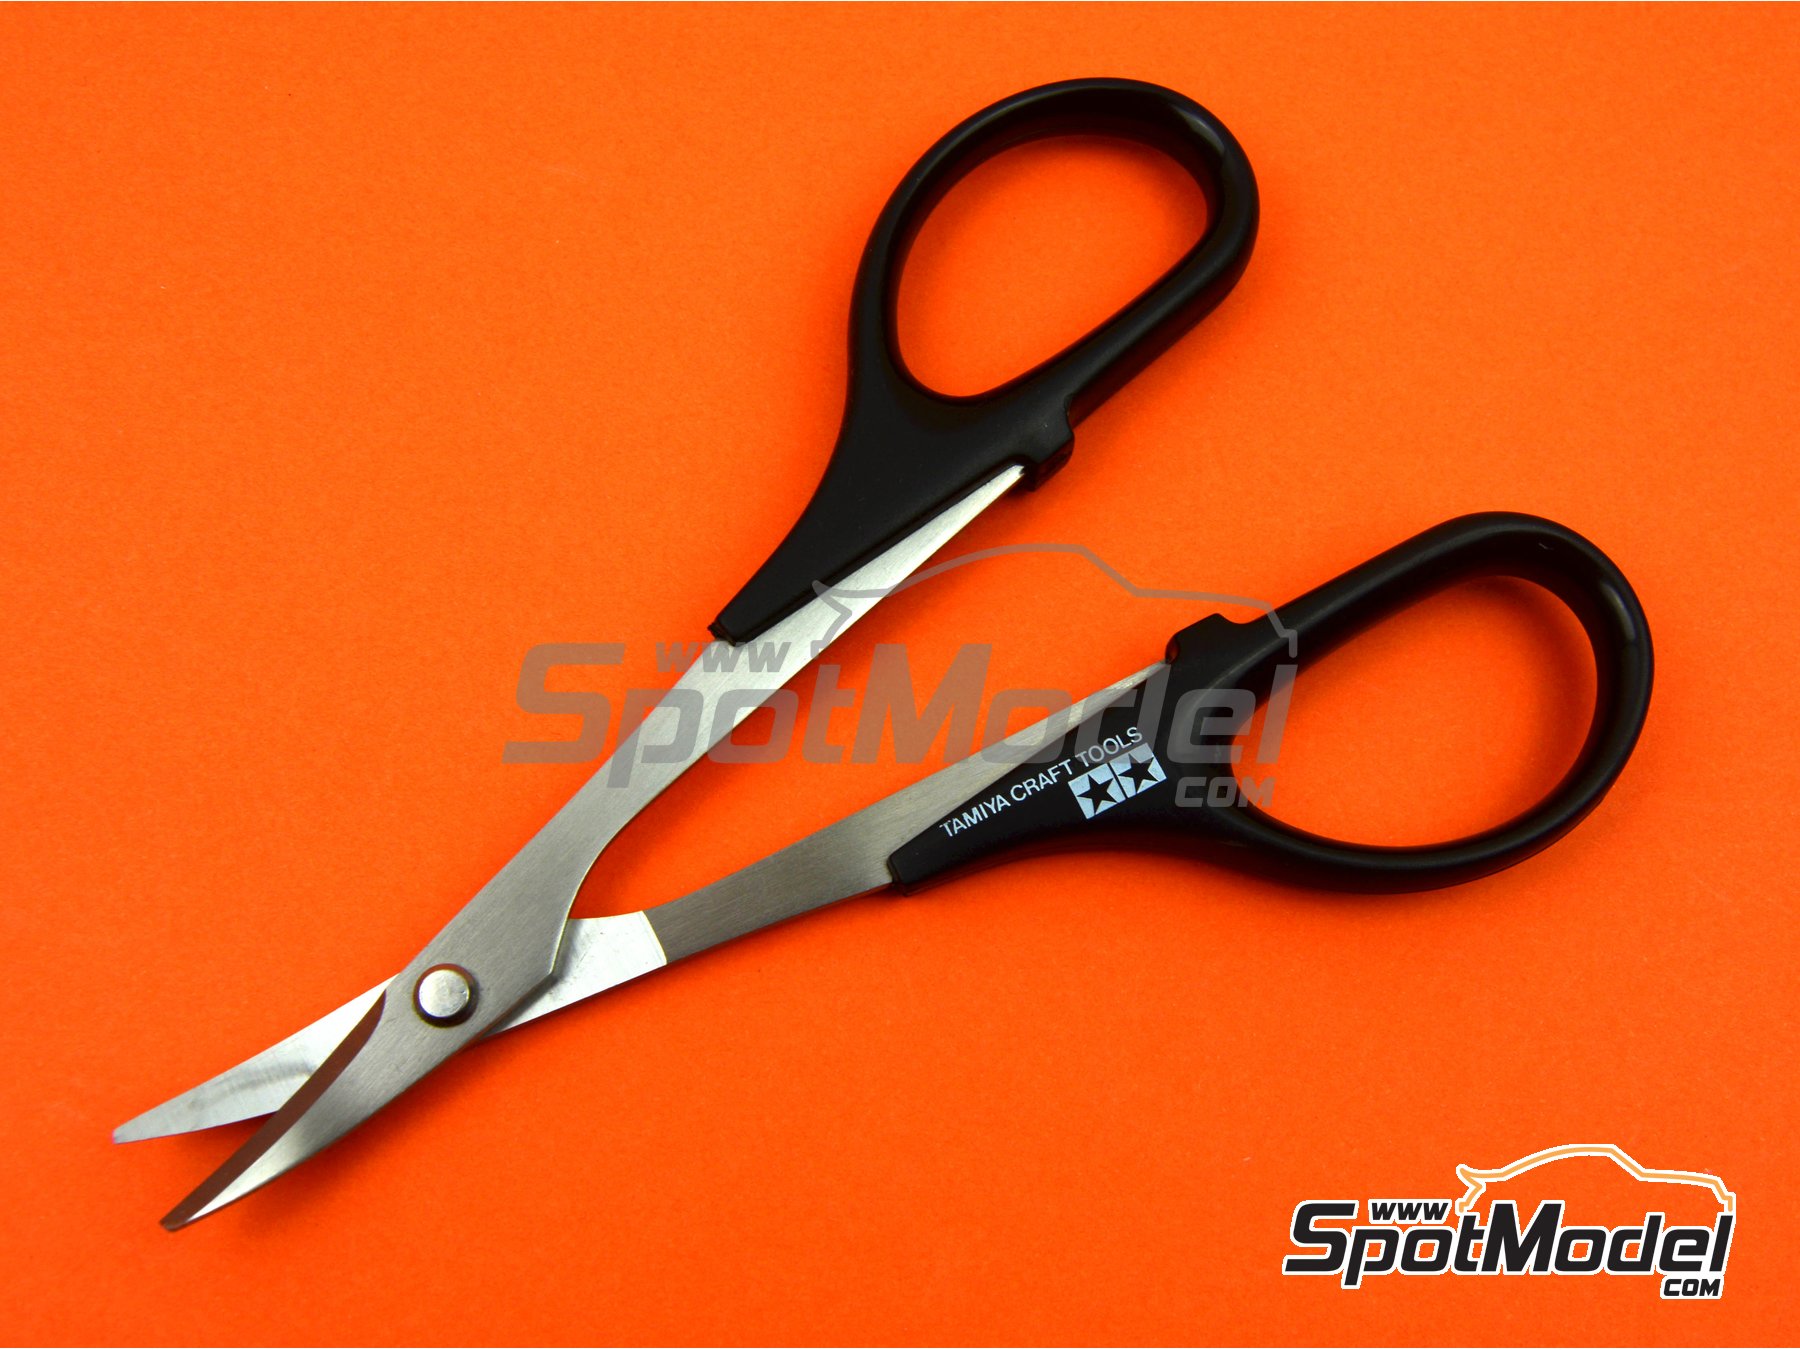 Tamiya 74005: Hobby tool - Curved scissors for plastic (ref. TAM74005)